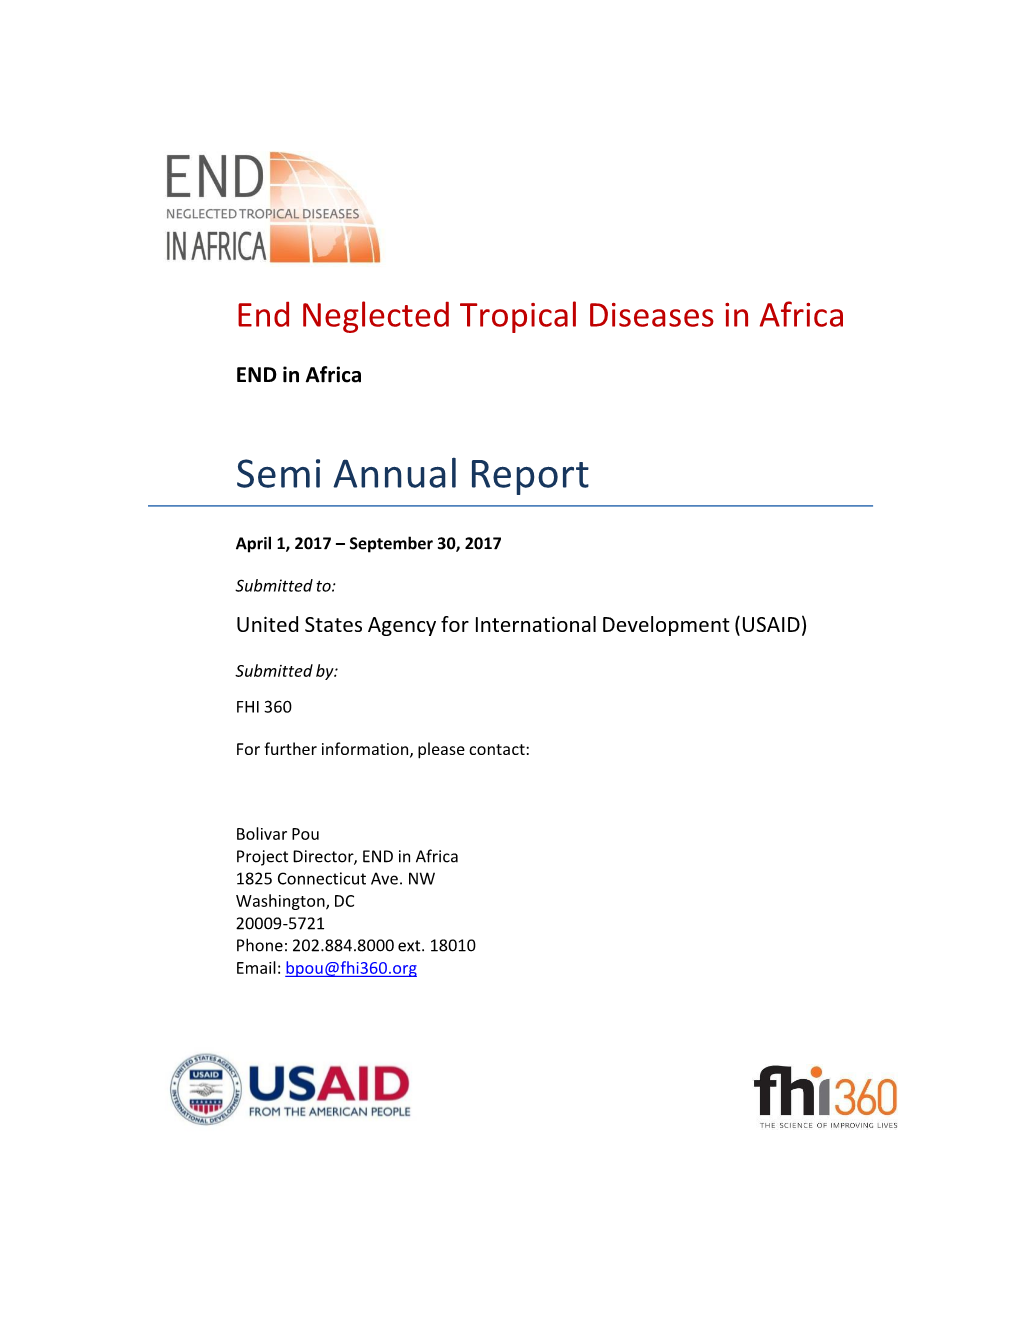 END in Africa Semi-Annual Report No. 14